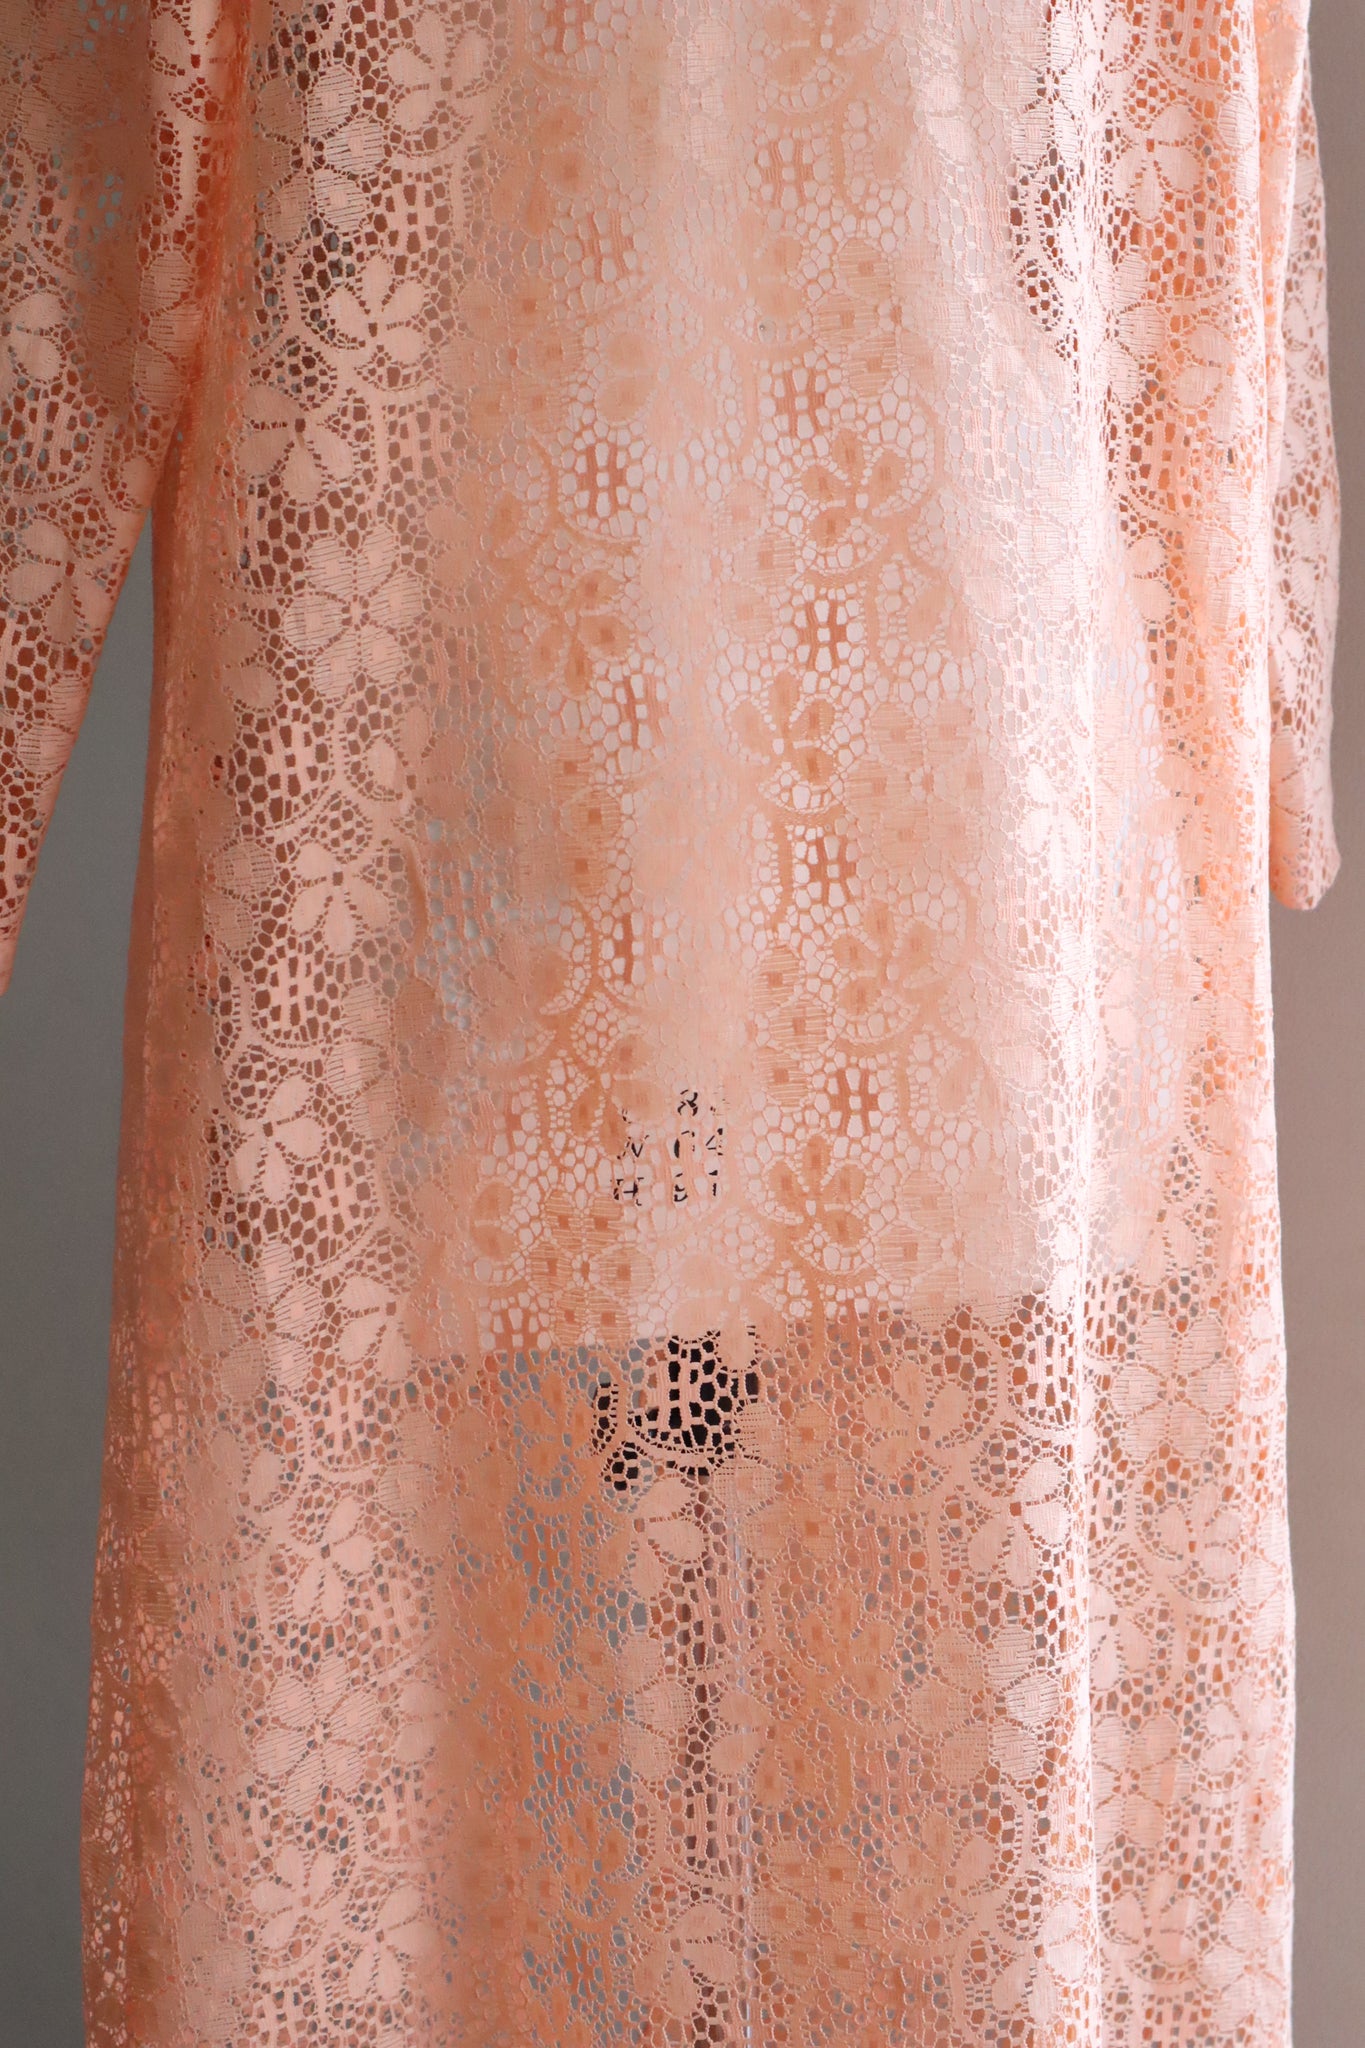 70s Coral Floral Lace Long Gown